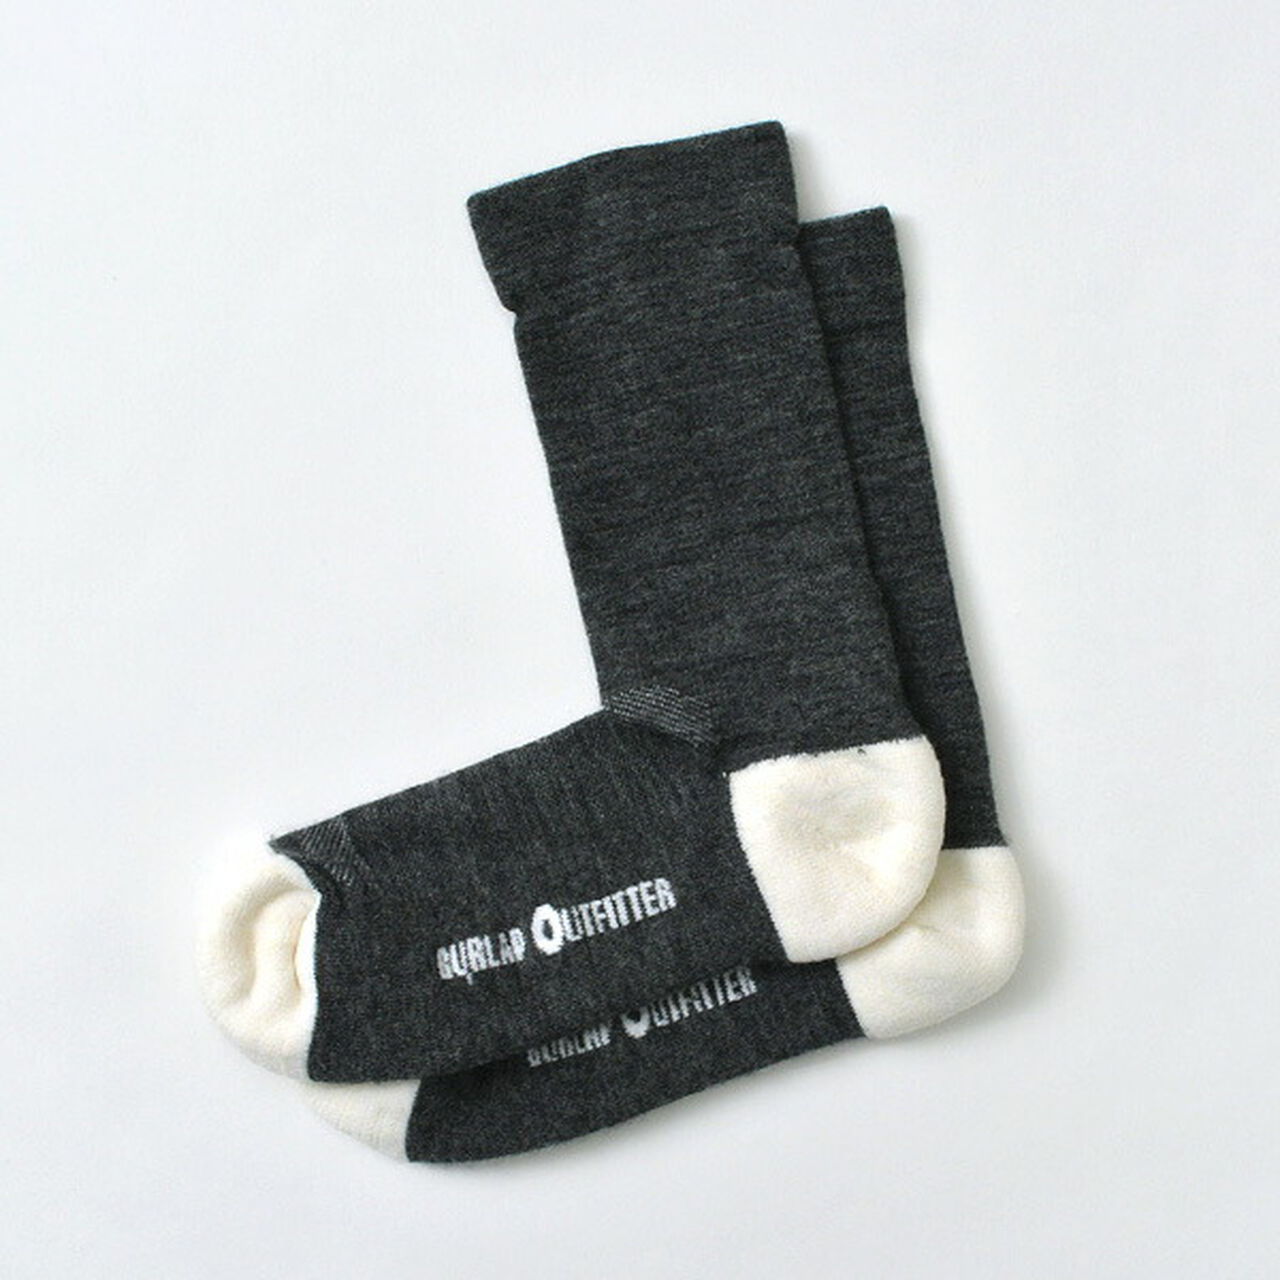 Colourblock Merino Socks / Wilderness Wear,Charcoal, large image number 0